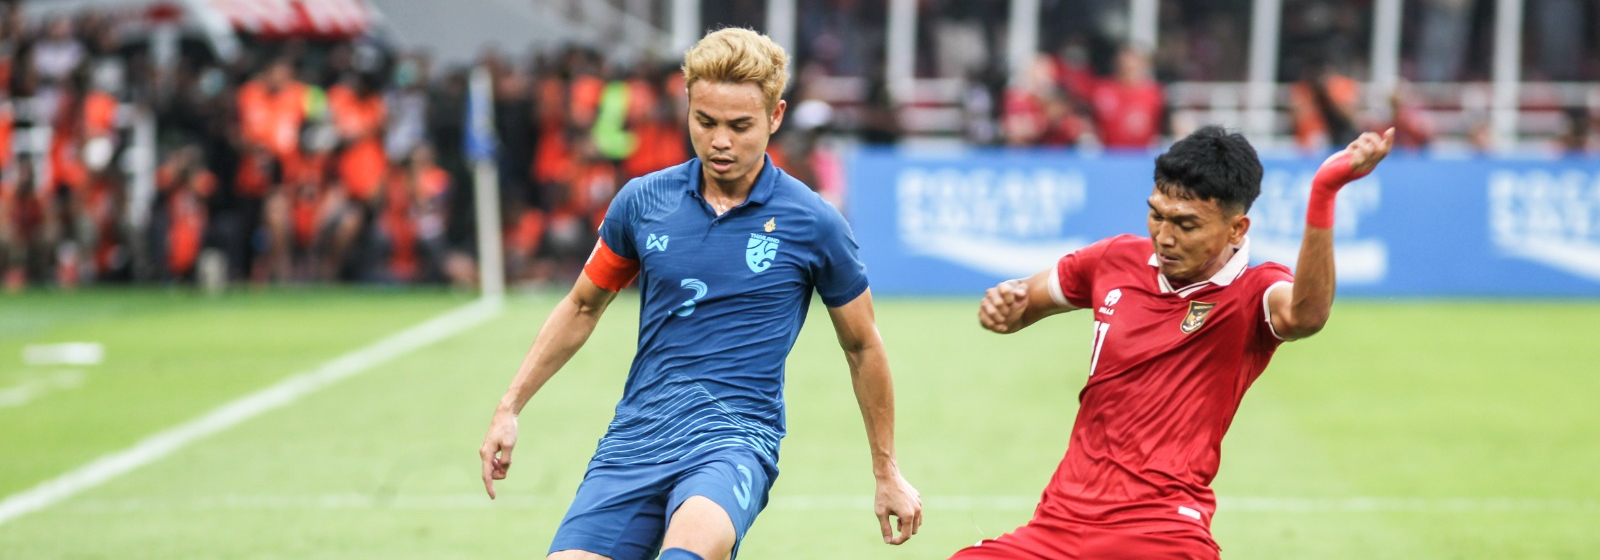 Piala AFF: Indonesia Ditahan Imbang 10 Pemain Thailand